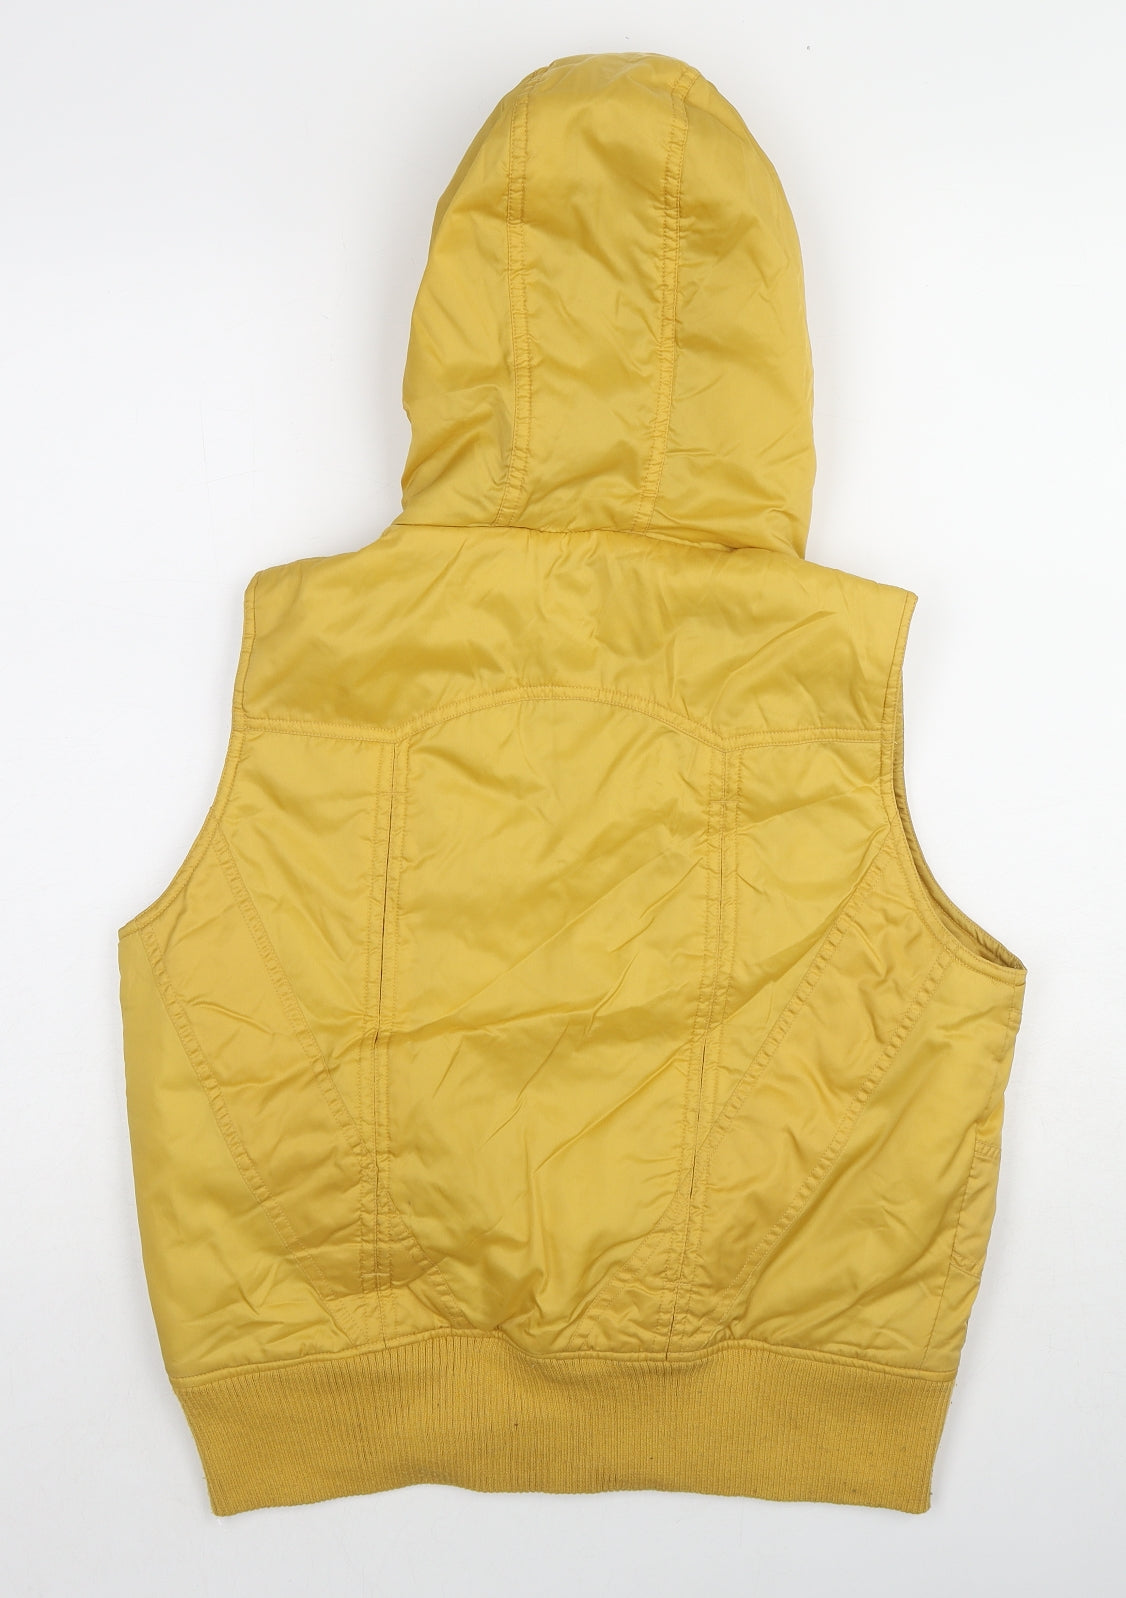 NEXT Womens Yellow Gilet Jacket Size 14 Zip